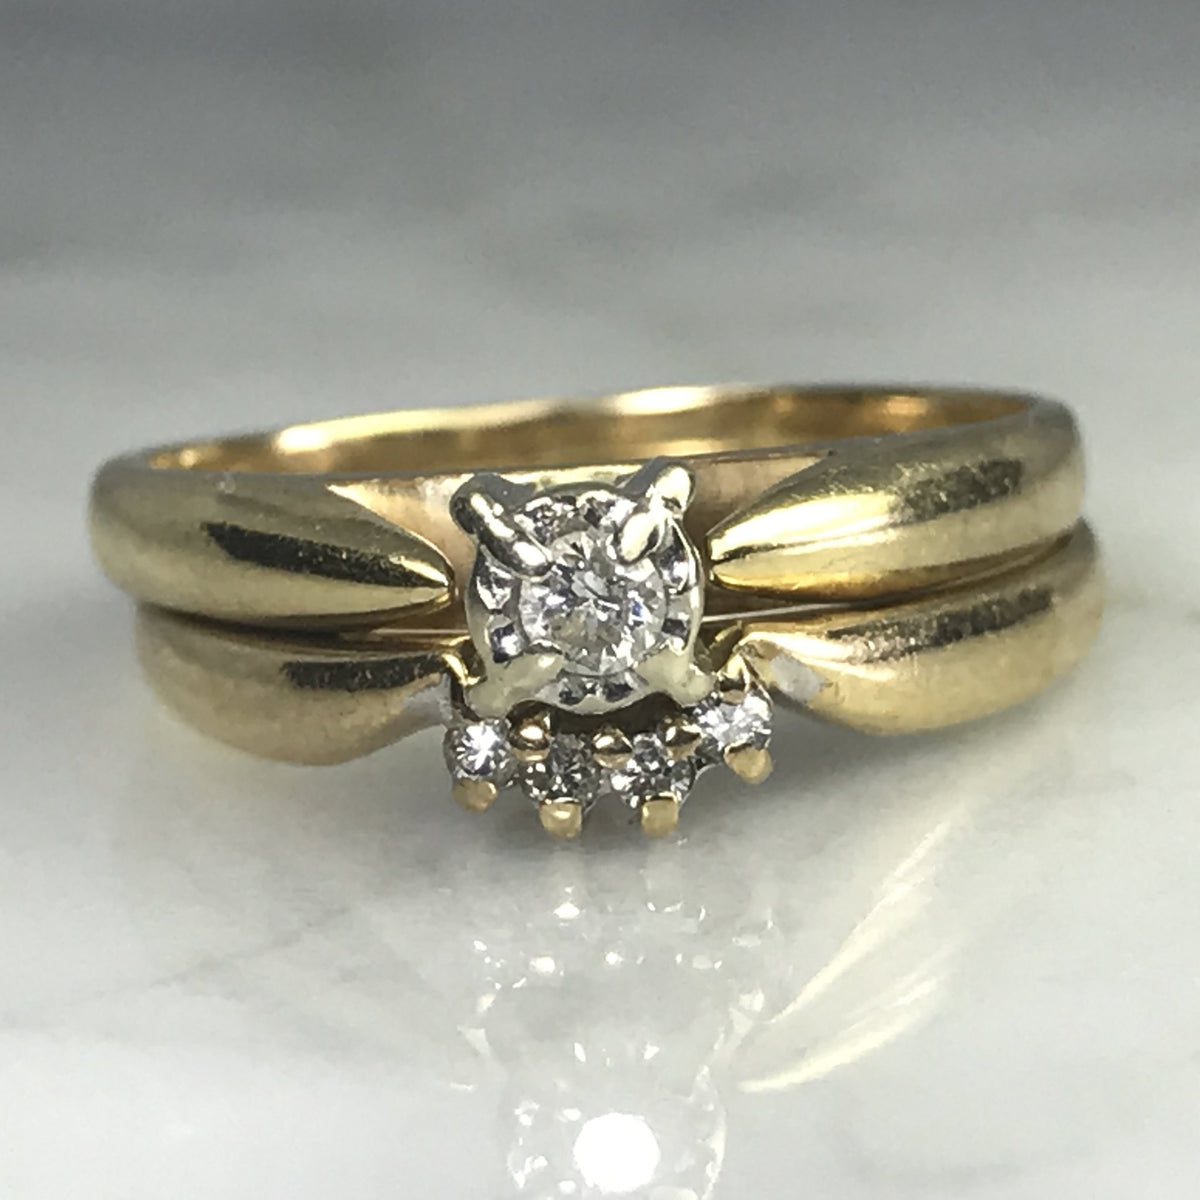 Vintage Diamond Bridal Set with Engagement Ring and Wedding Band.